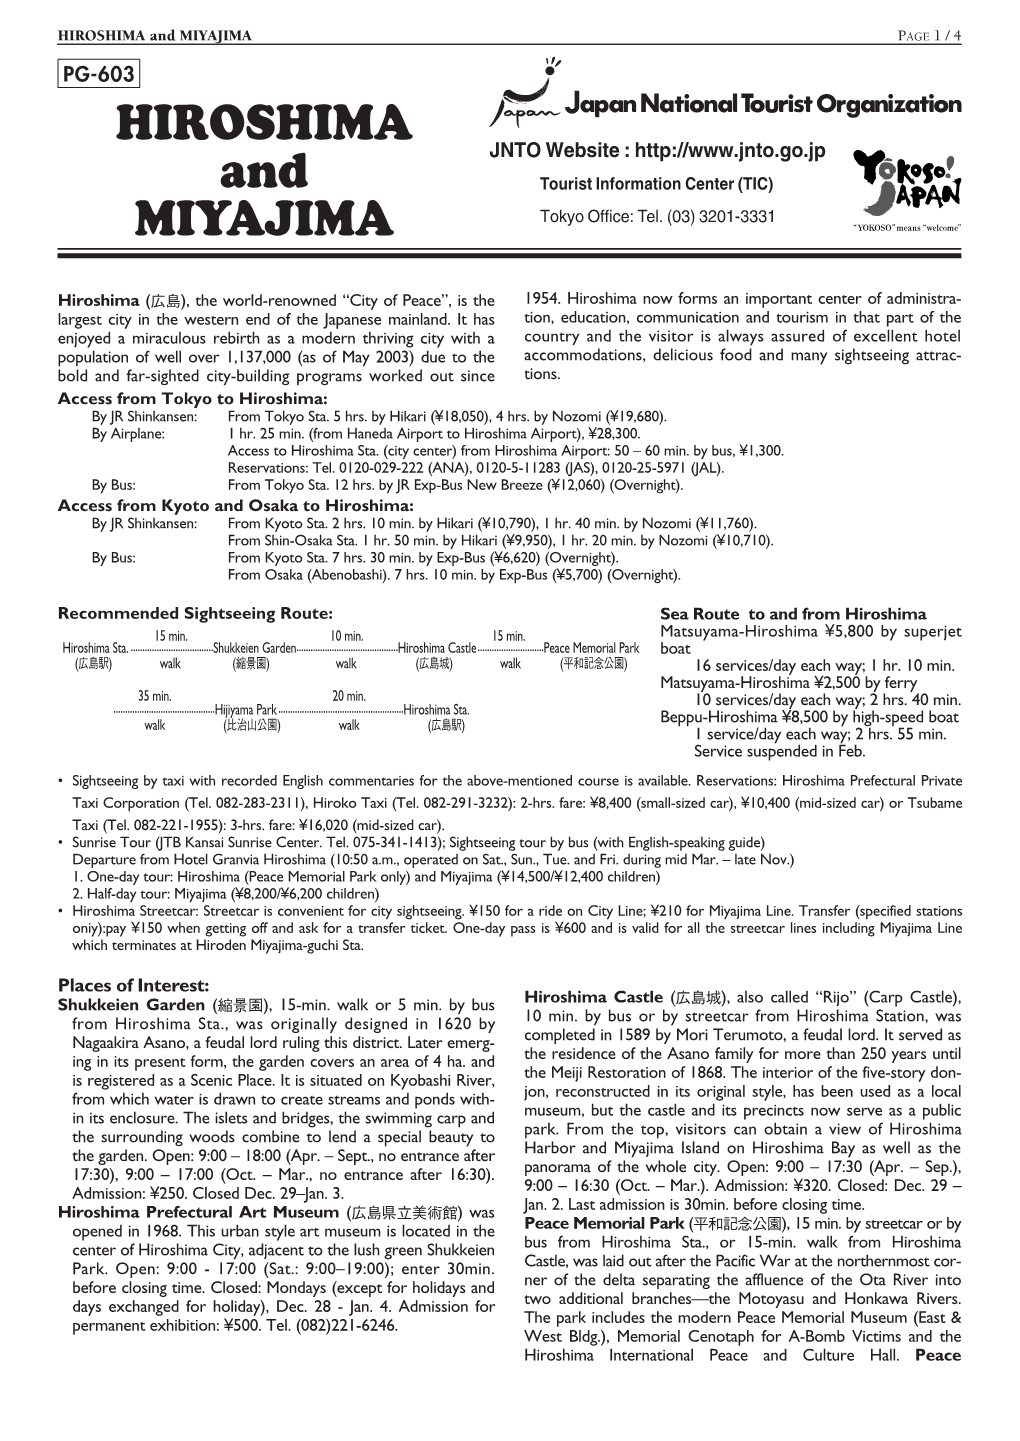 HIROSHIMA and MIYAJIMA PAGE 1/ 4